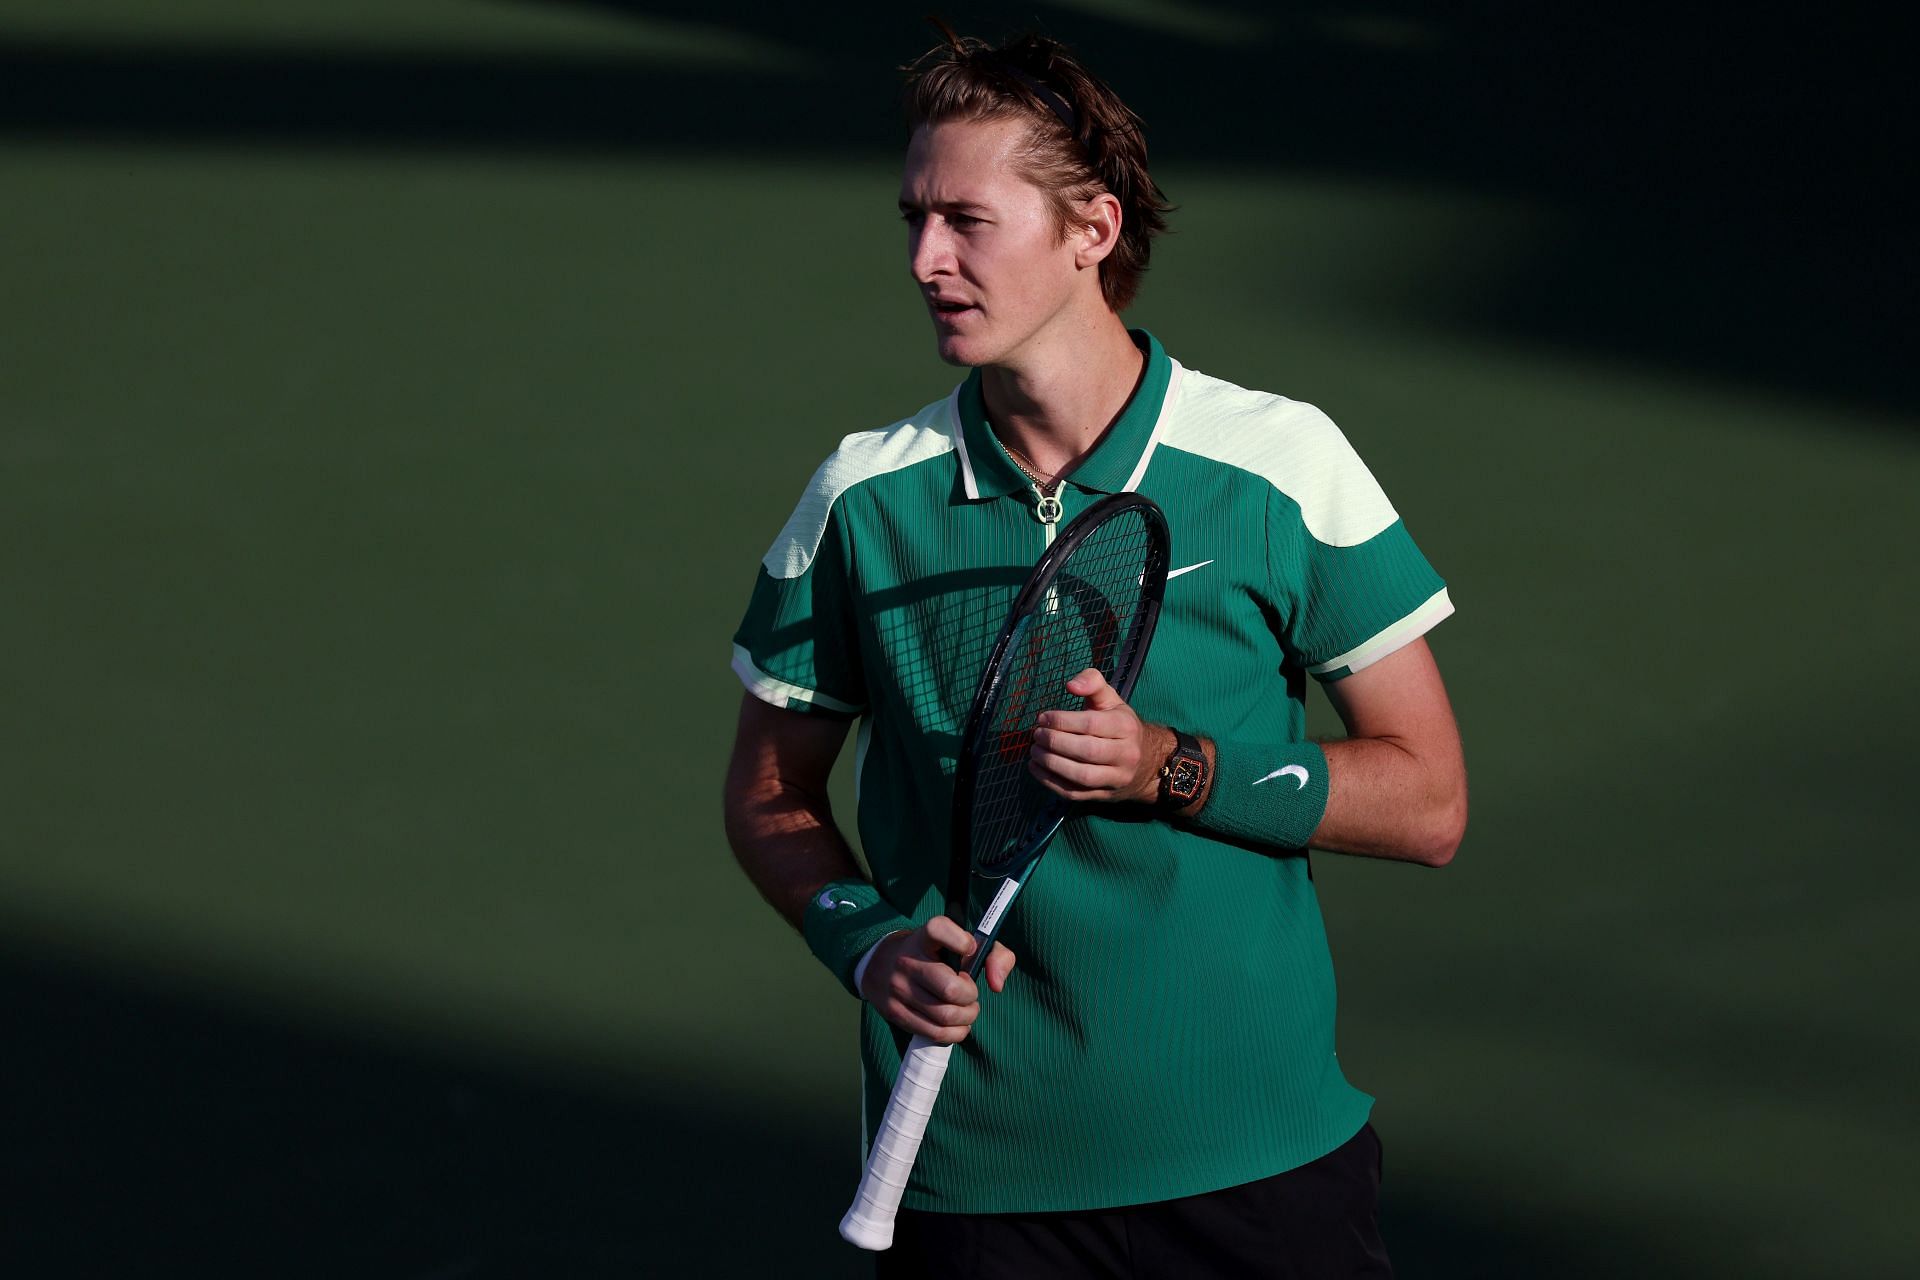 Sebastian Korda in action at the Dubai Tennis Championships